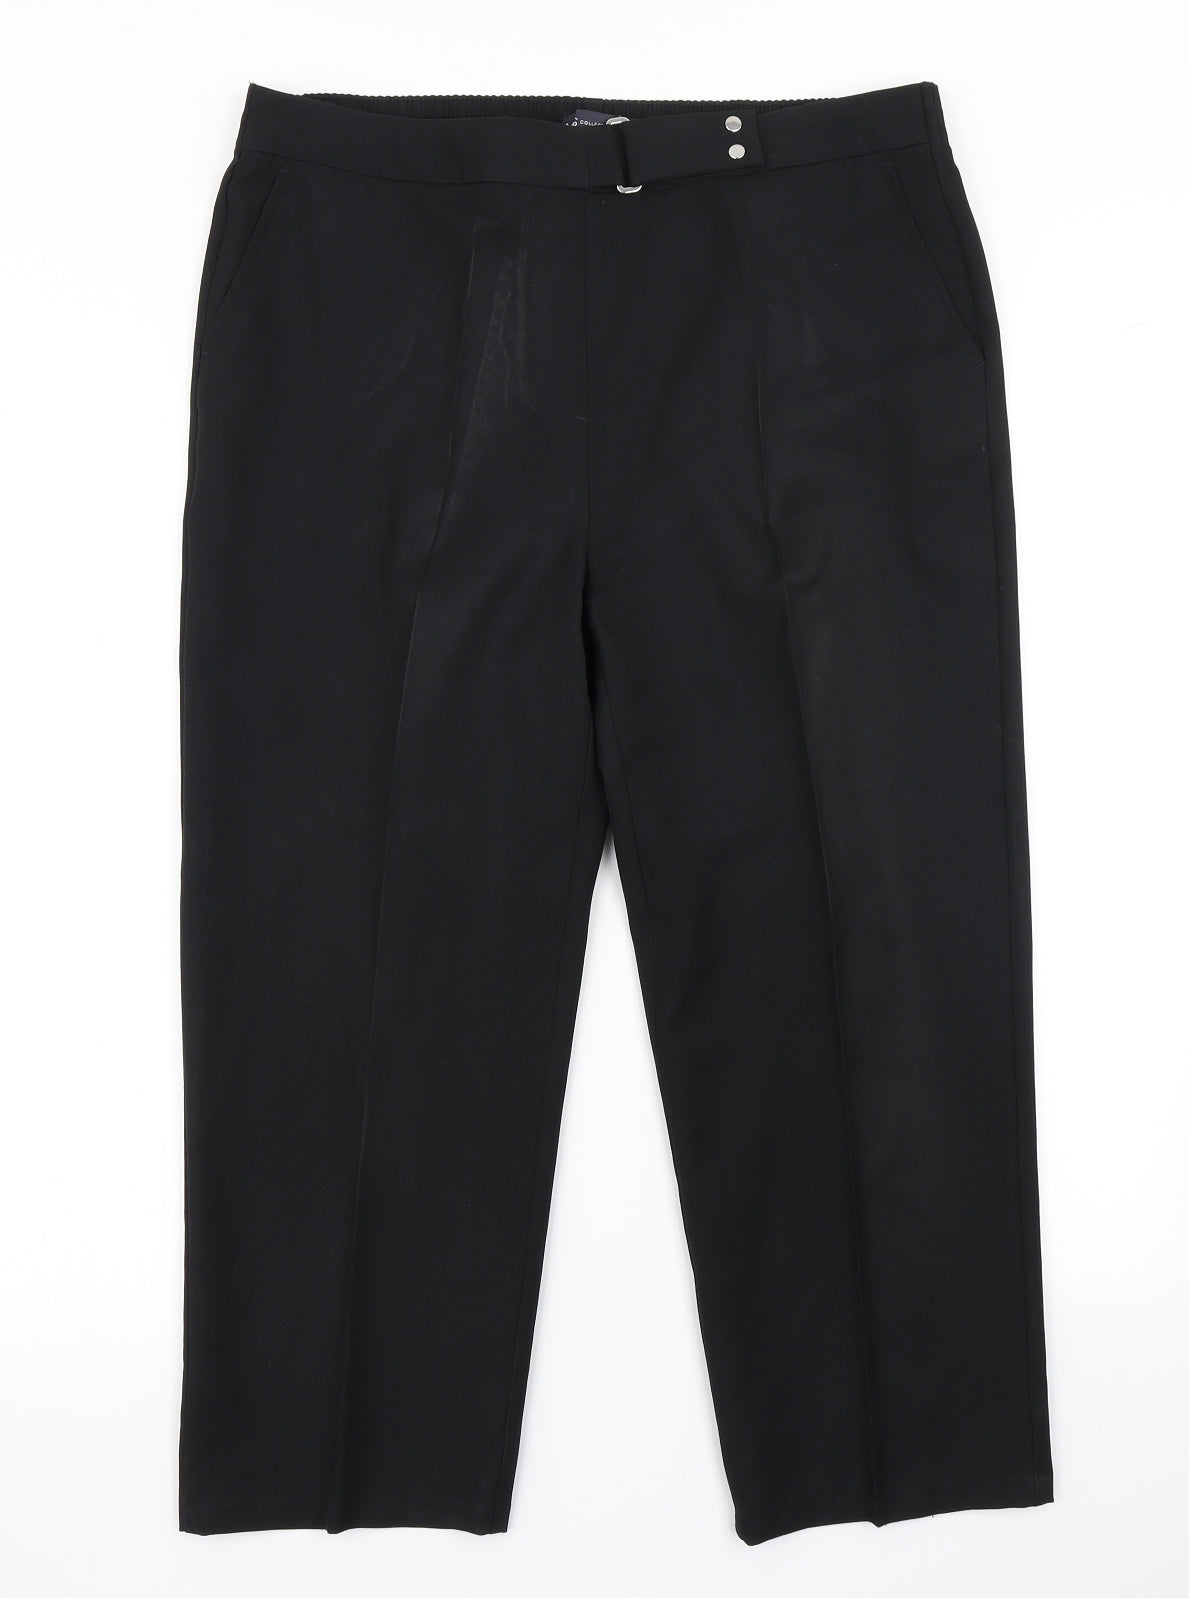 M&S Collection Womens Black Dress Pants Trousers Size 14 L20 in – Preworn  Ltd